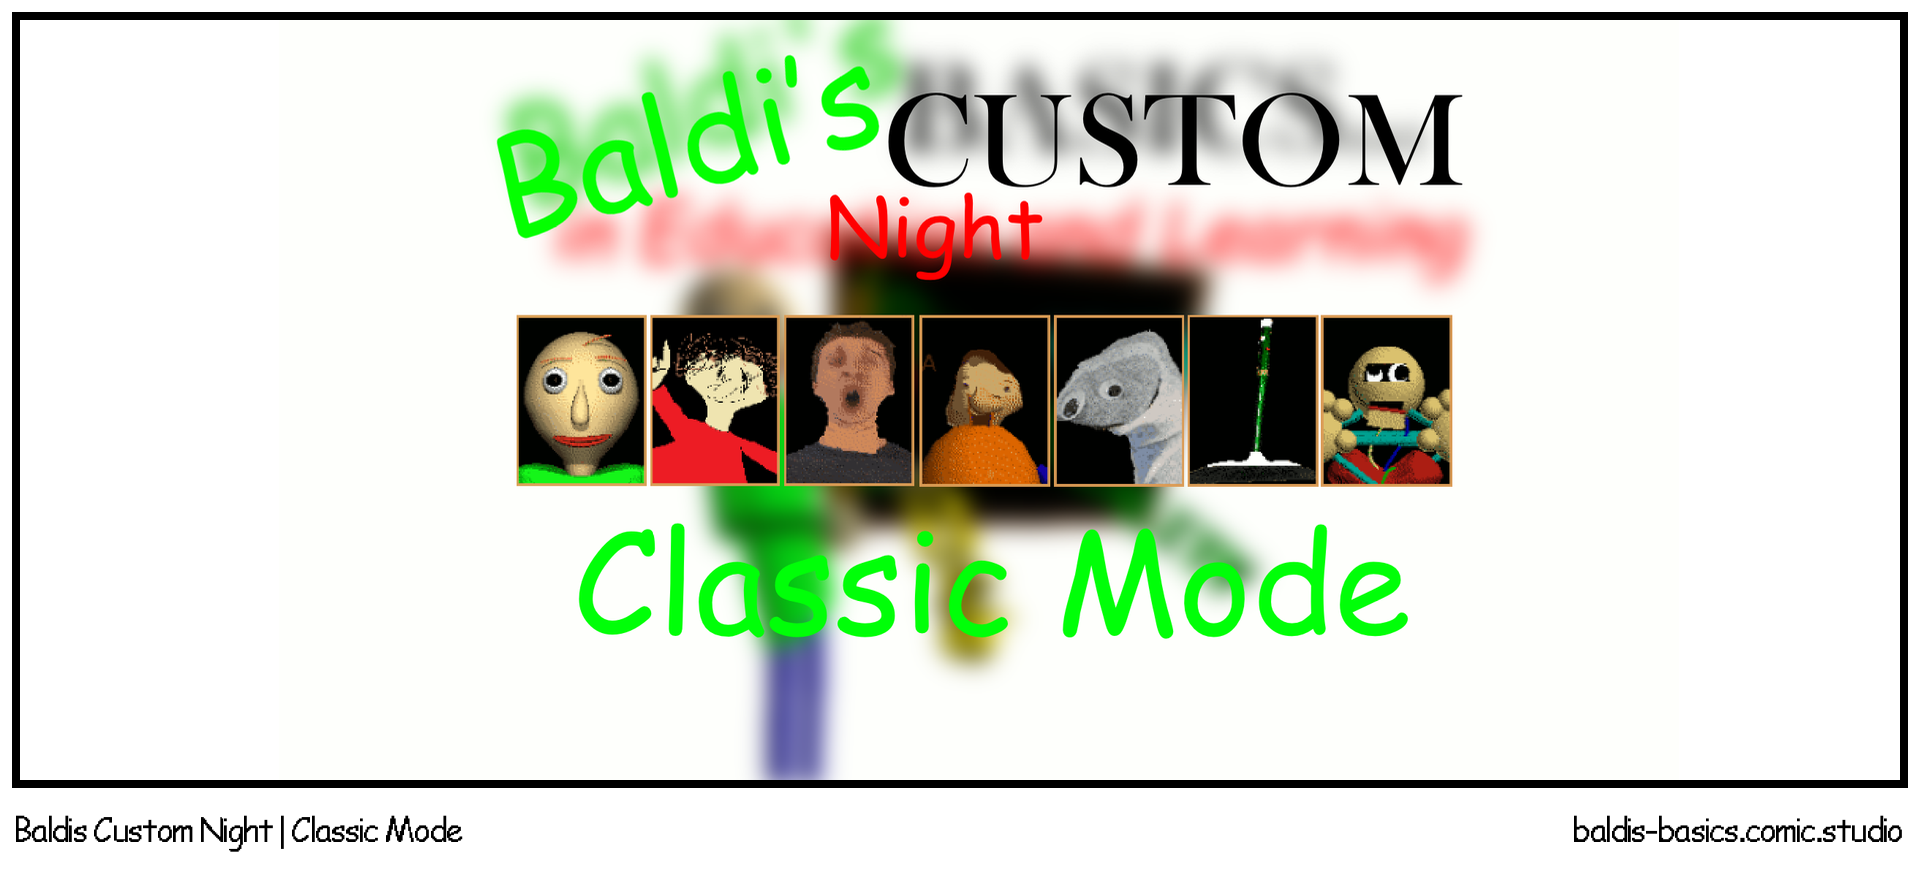 Baldis Custom Night | Classic Mode